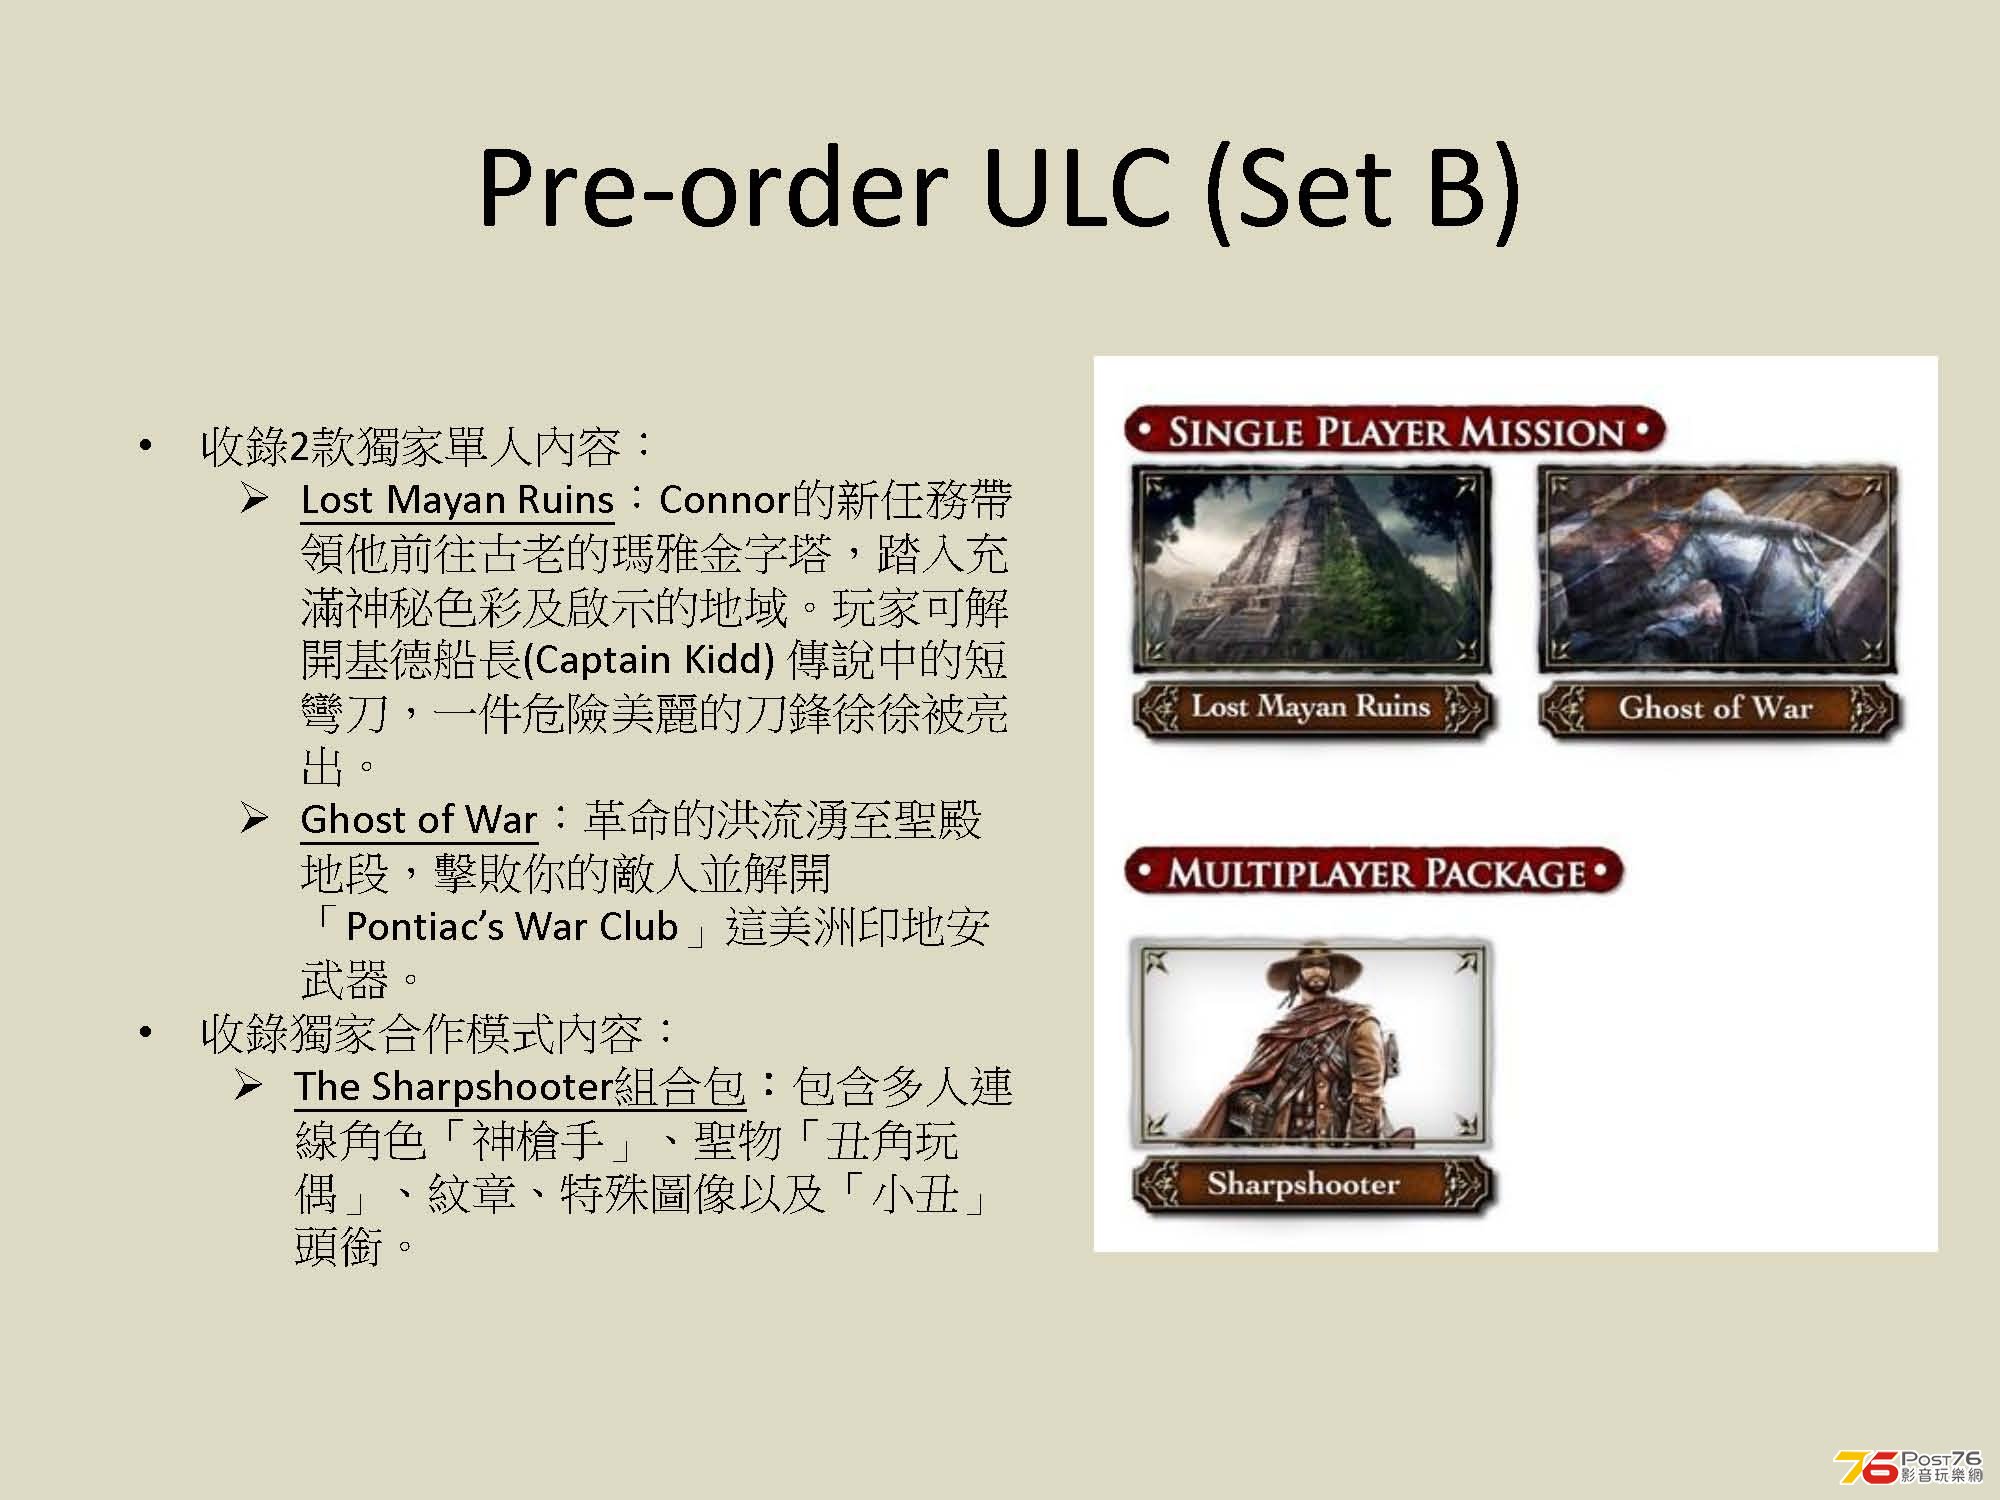 Assassin’s Creed III ULC List in Chi_頁面_18.jpg